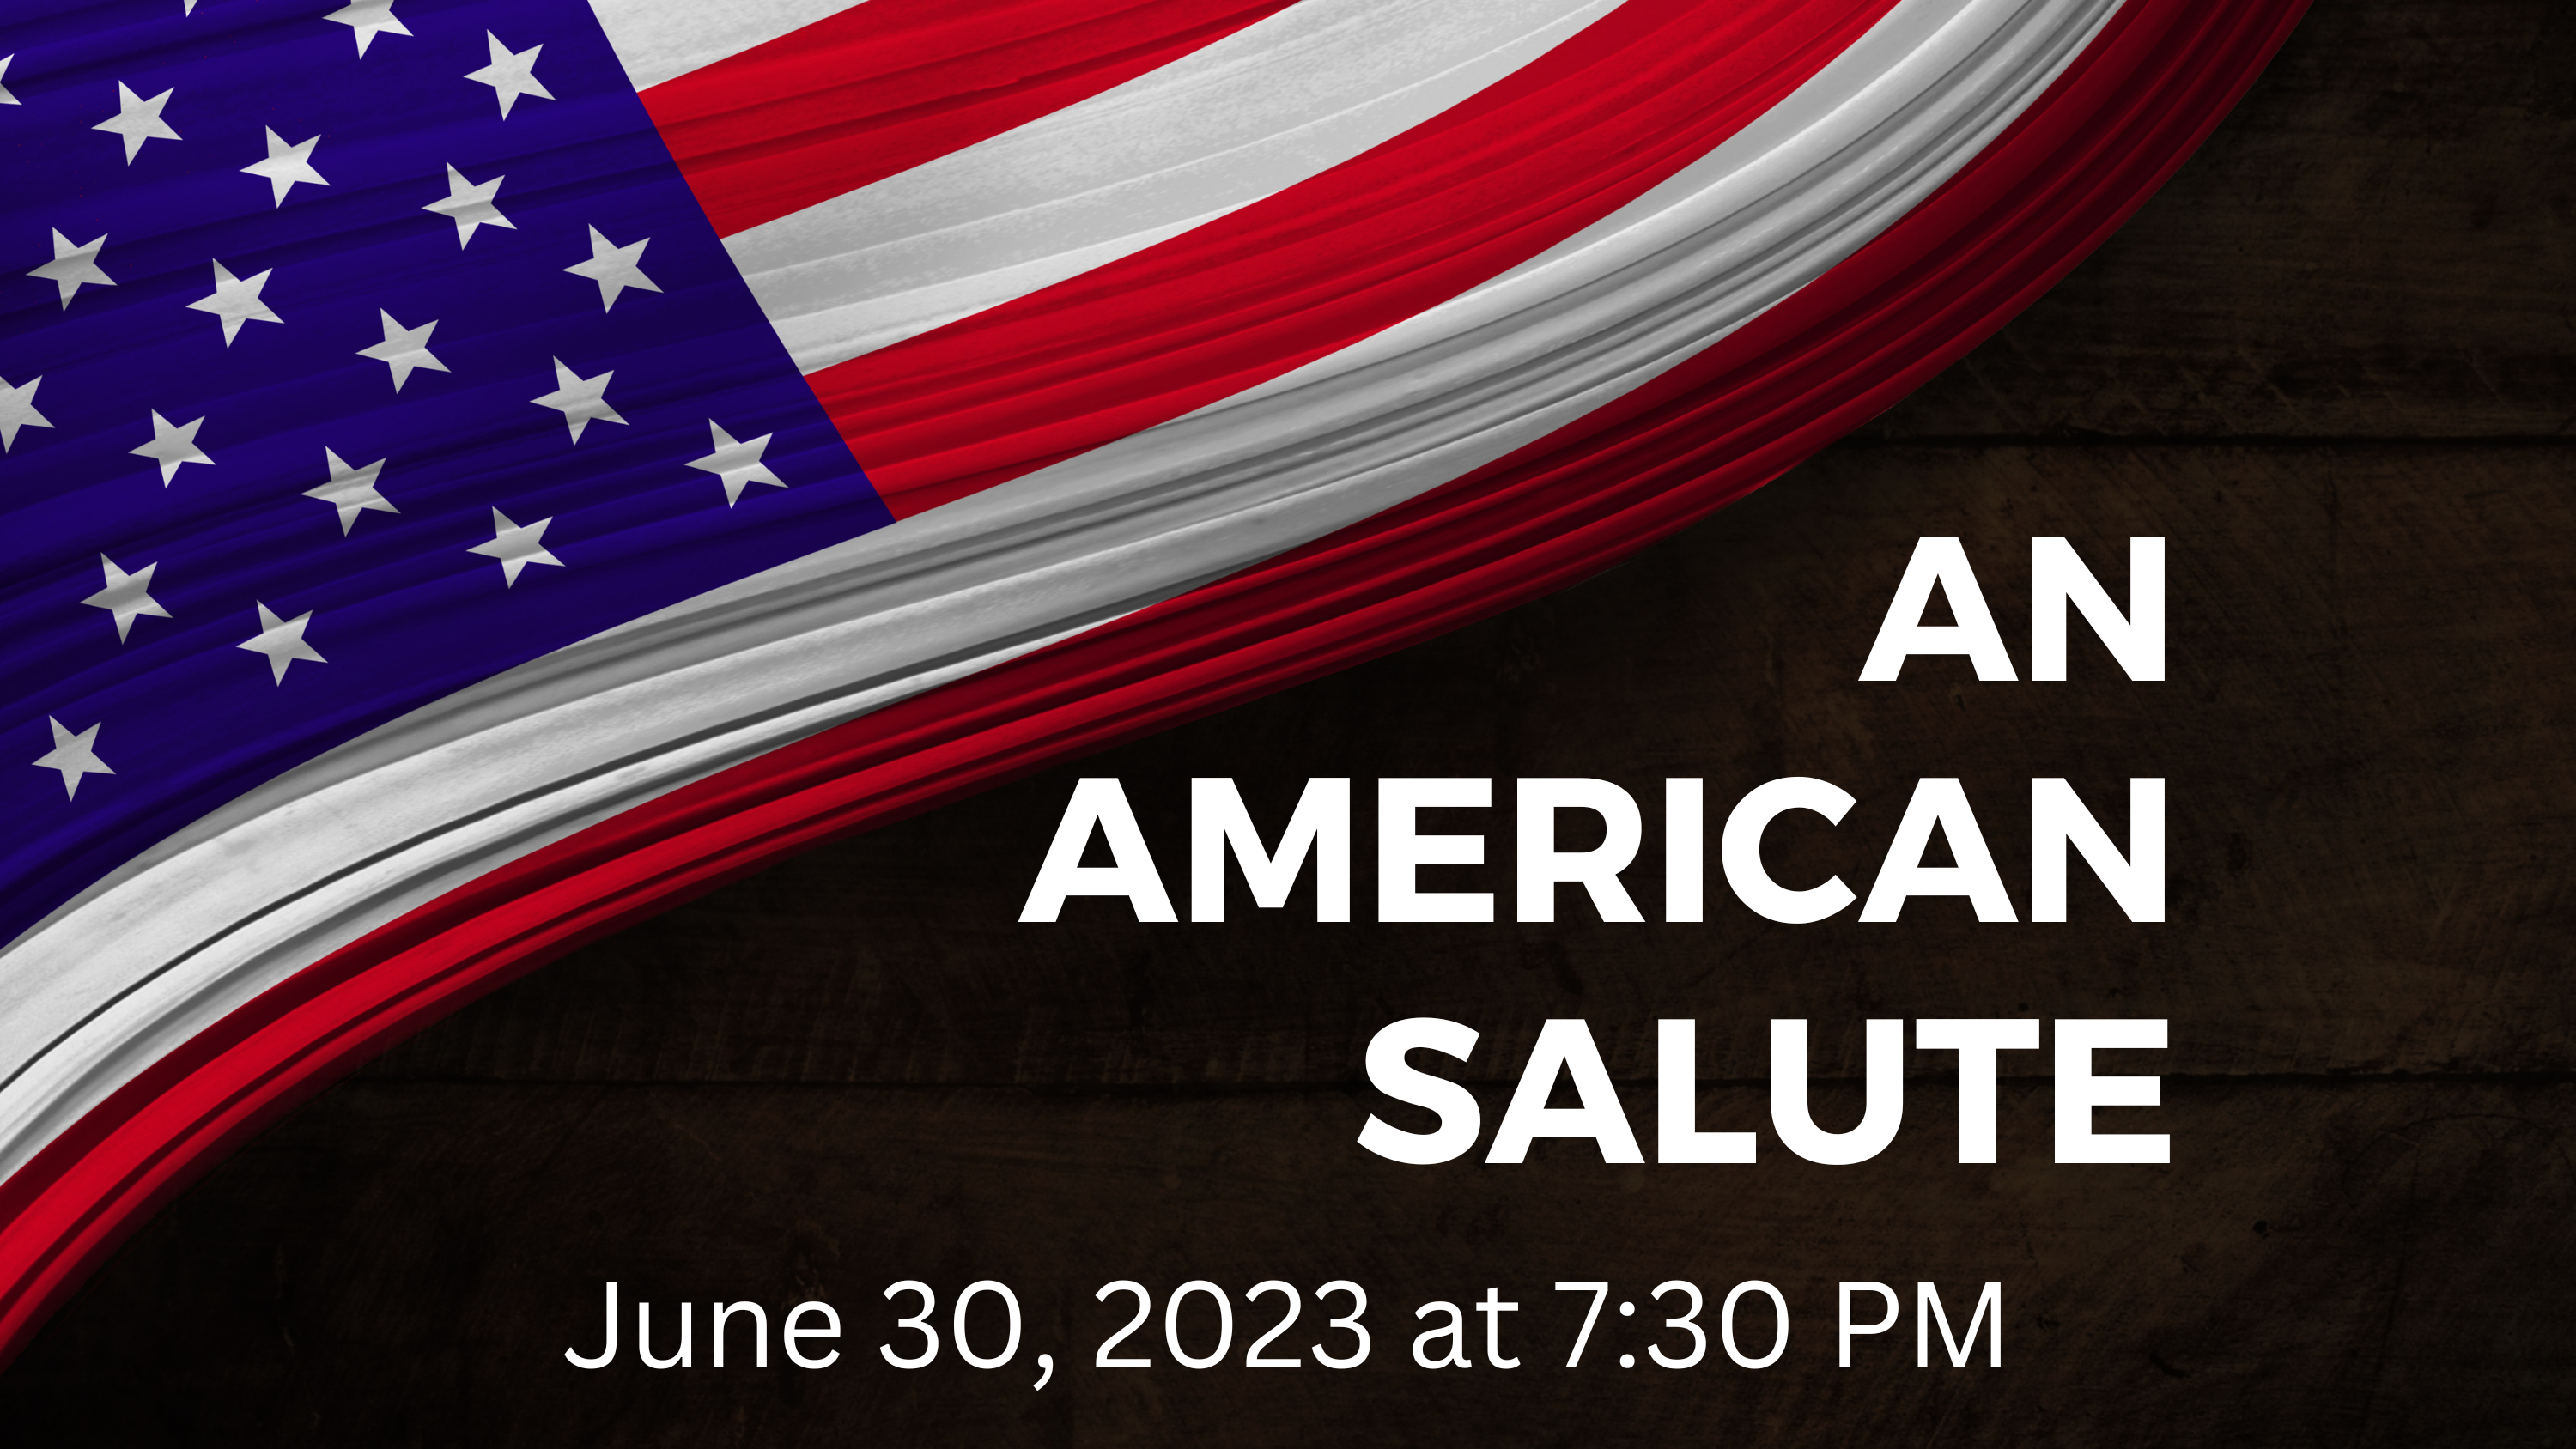 An American Salute June 30, 2023